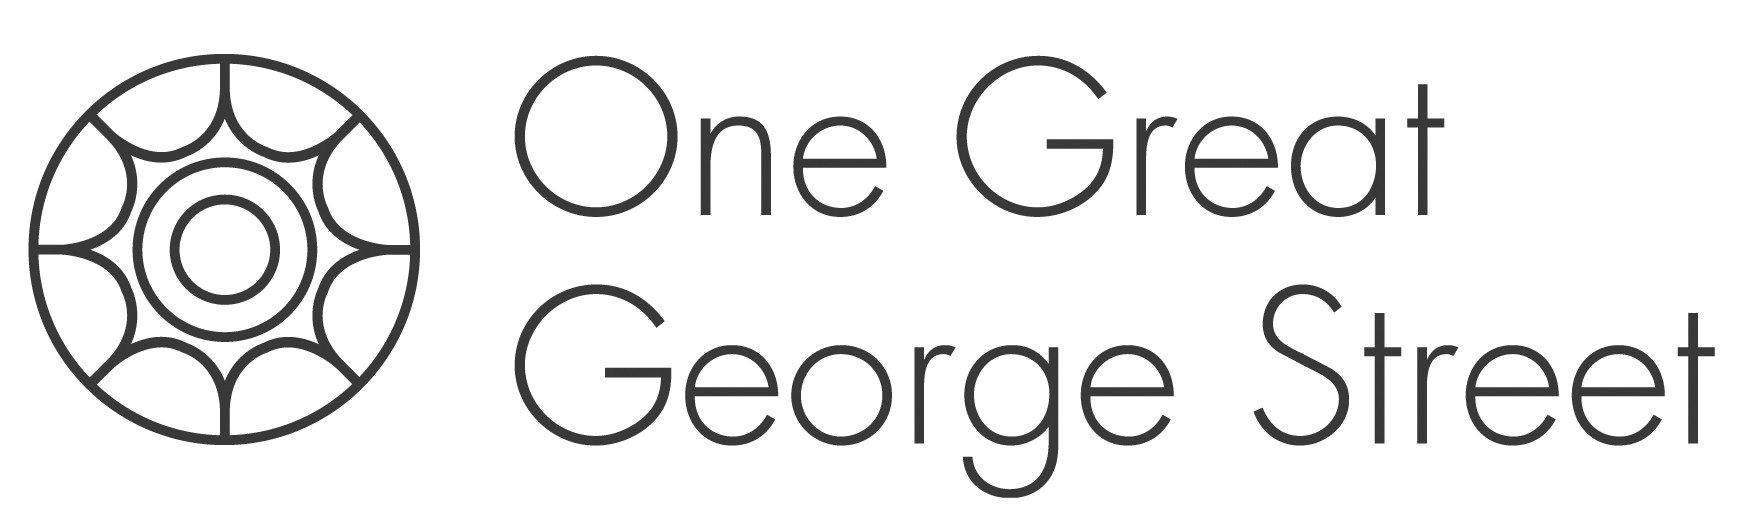 one great george street